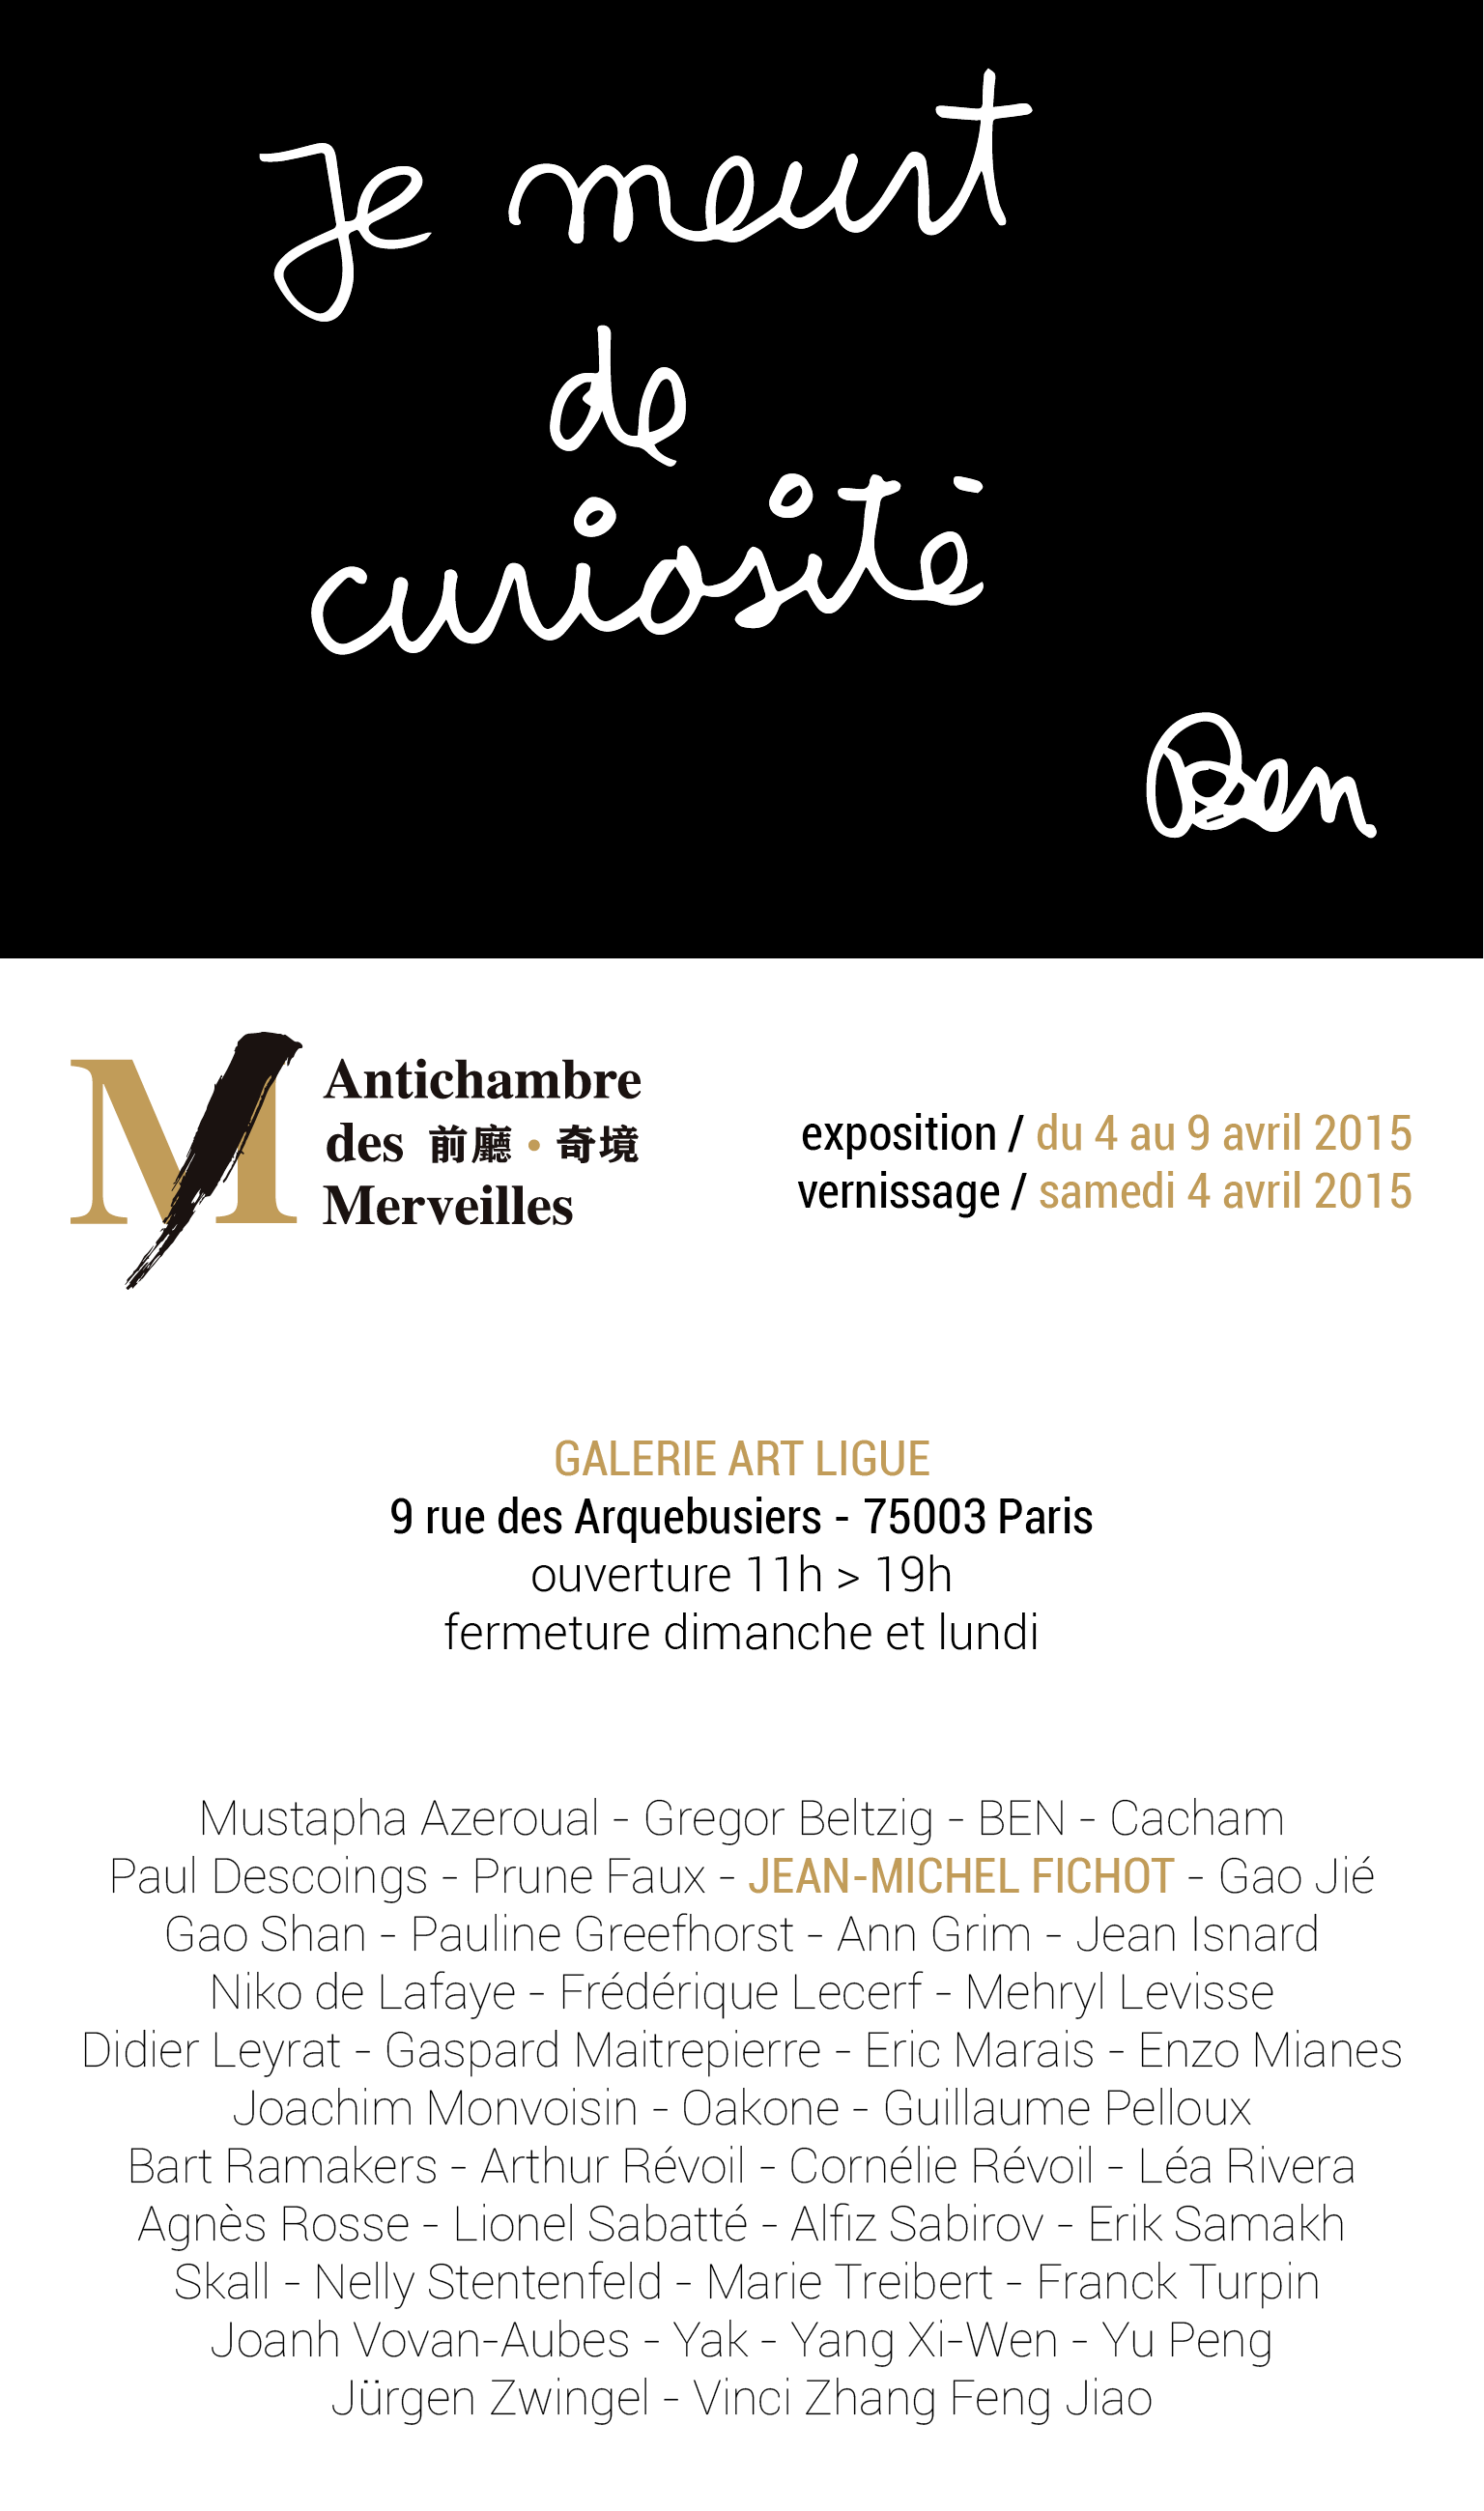 Exhibition at the Gallery Art Ligue, Paris 2015.